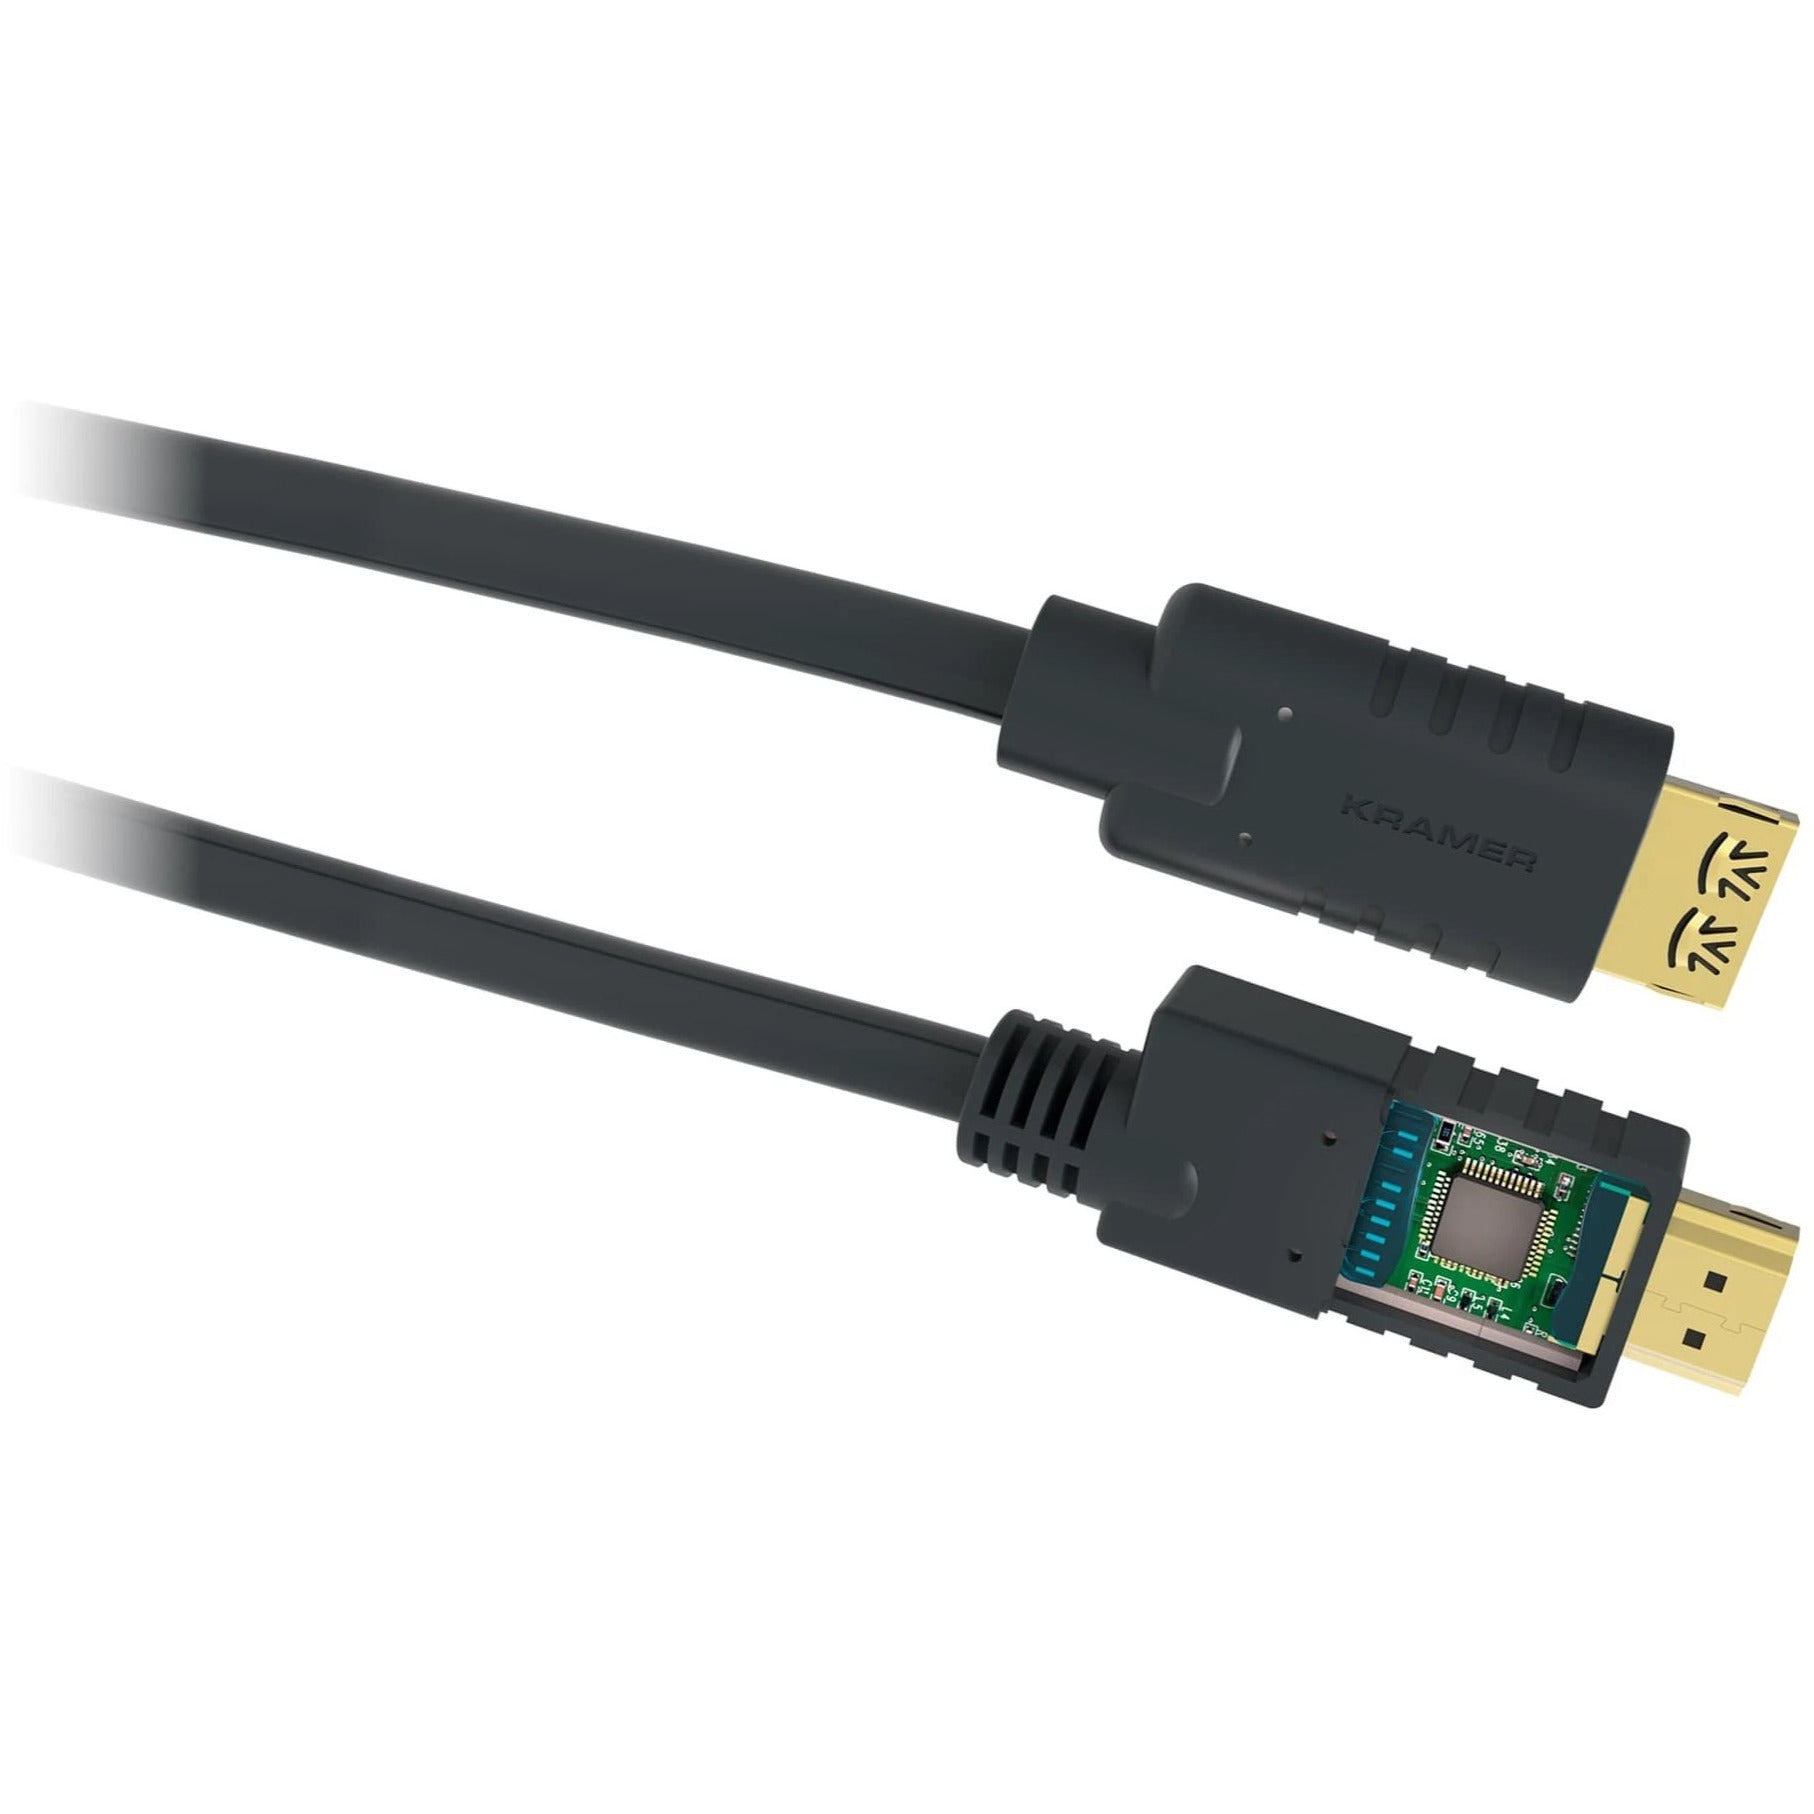 Kramer High-Speed HDMI 2.0 Cable (6') C-HM/HM-6 B&H Photo